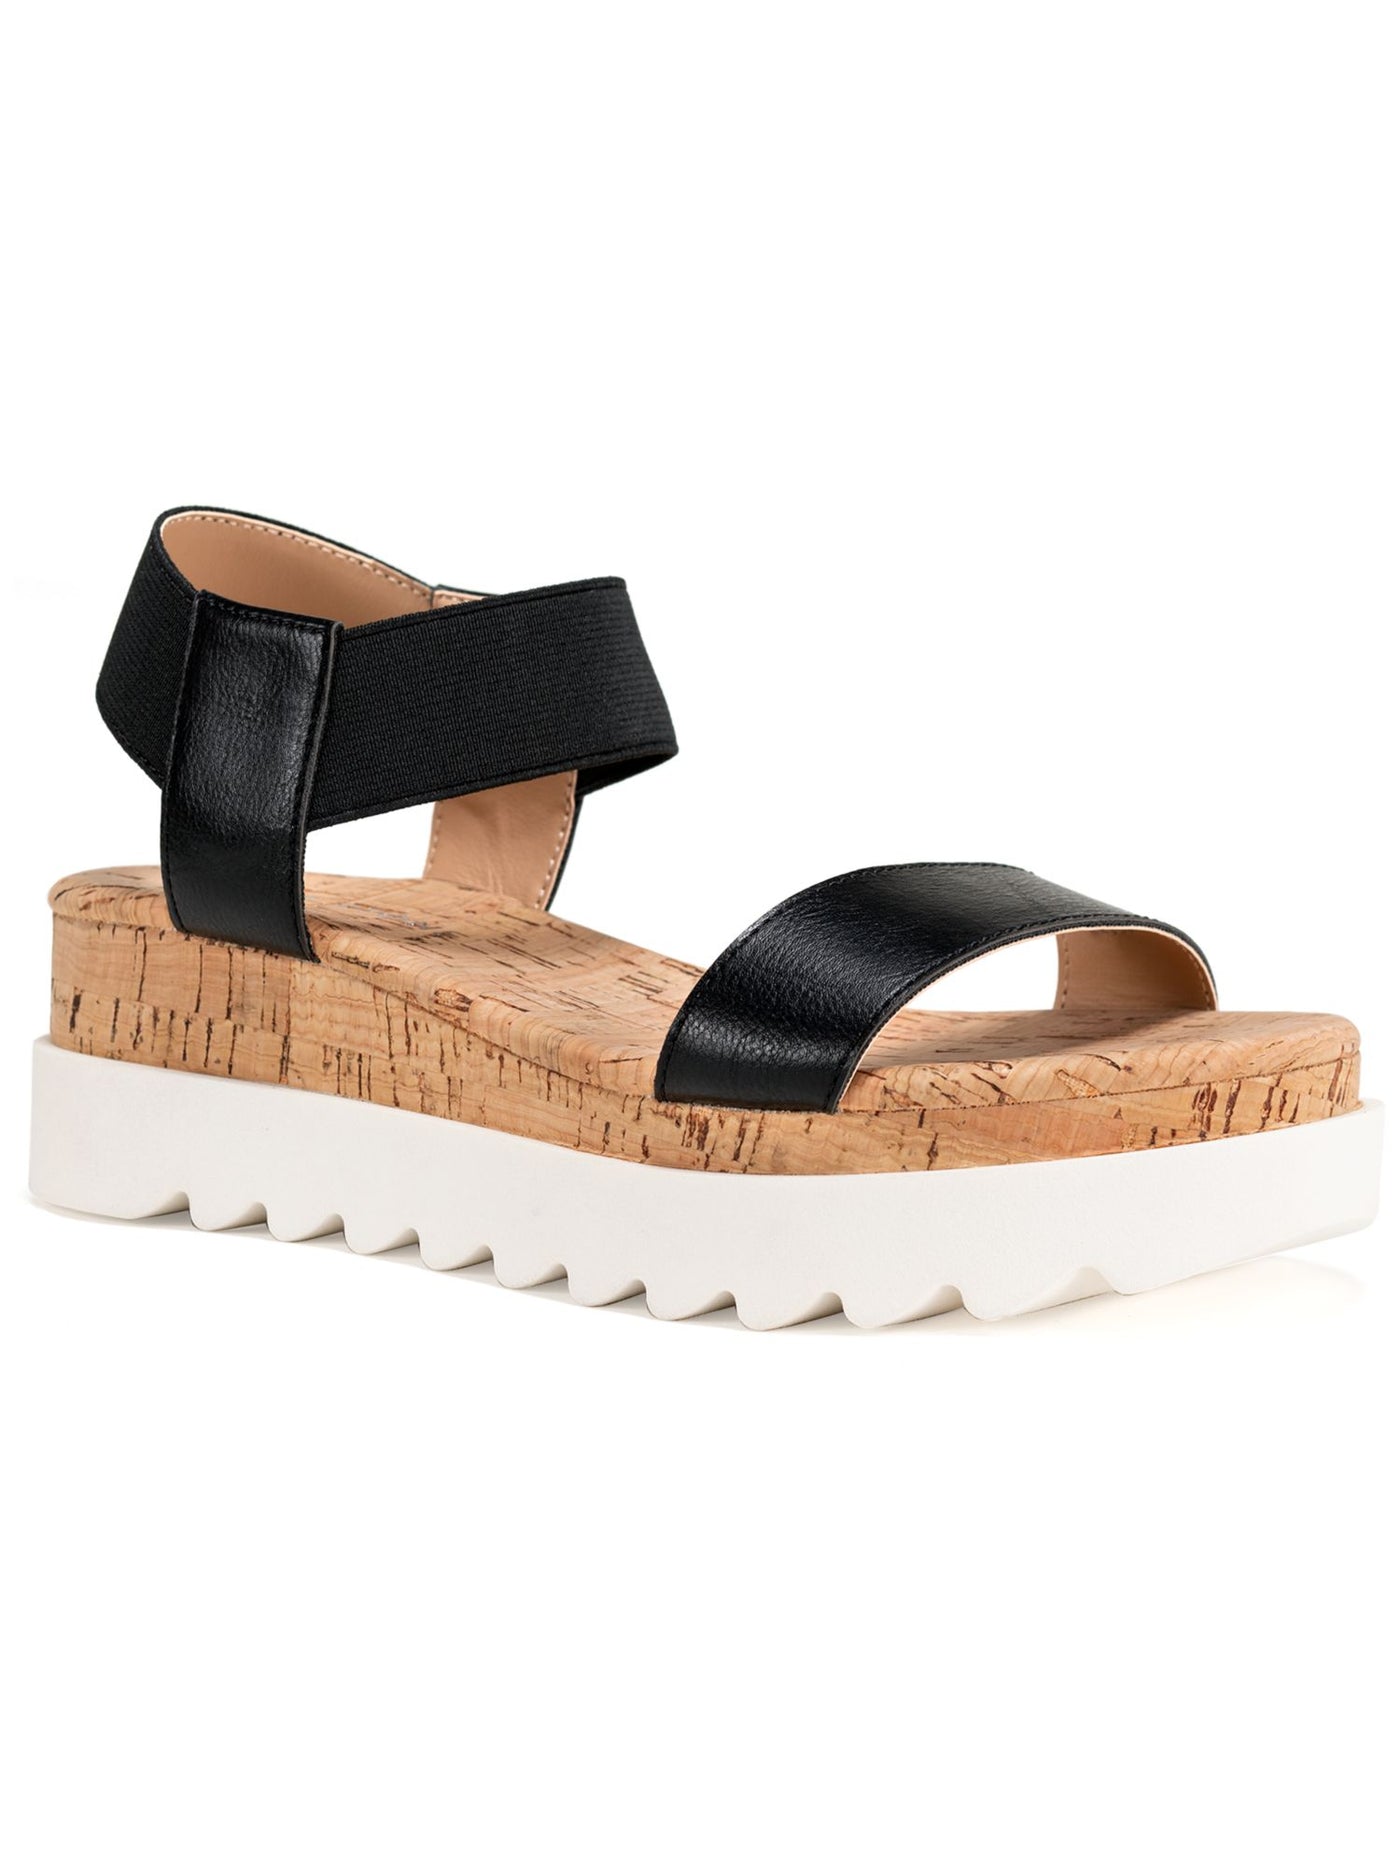 SUN STONE Womens Black 1" Platform Cork-Like Stretch Comfort Ankle Strap Slip Resistant Melanyy Round Toe Wedge Slip On Sandals Shoes 8 M